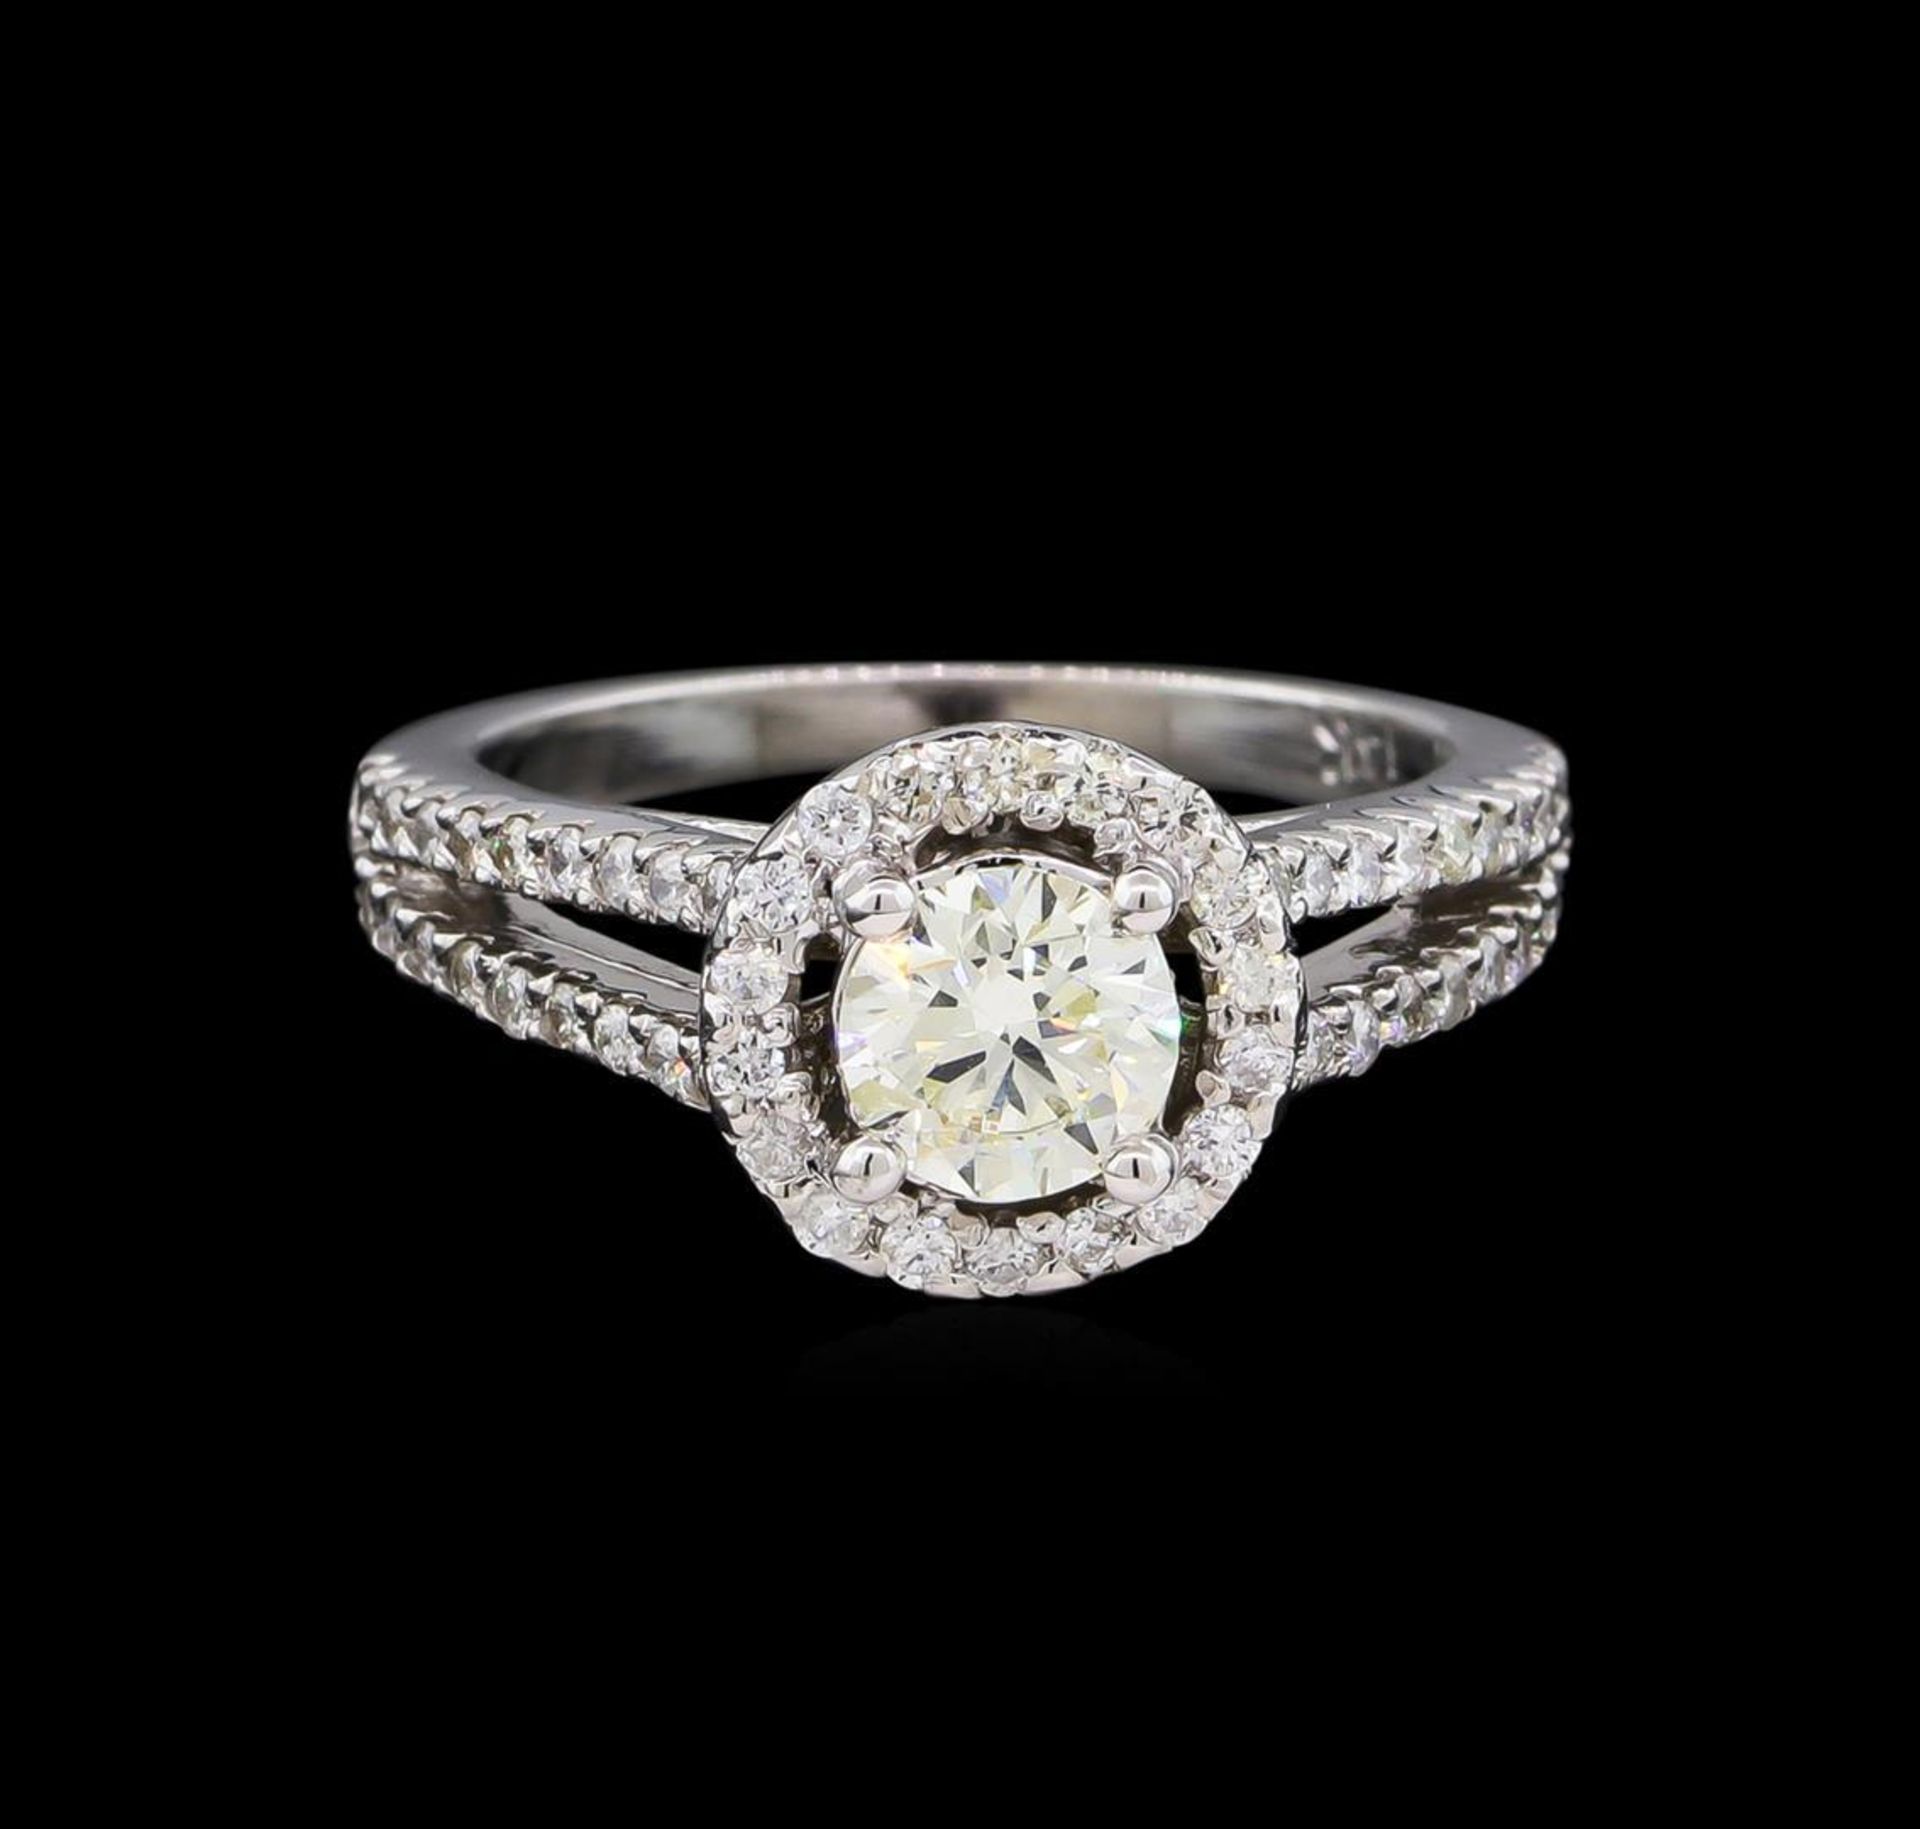 1.18 ctw Diamond Ring - 14KT White Gold - Image 2 of 5